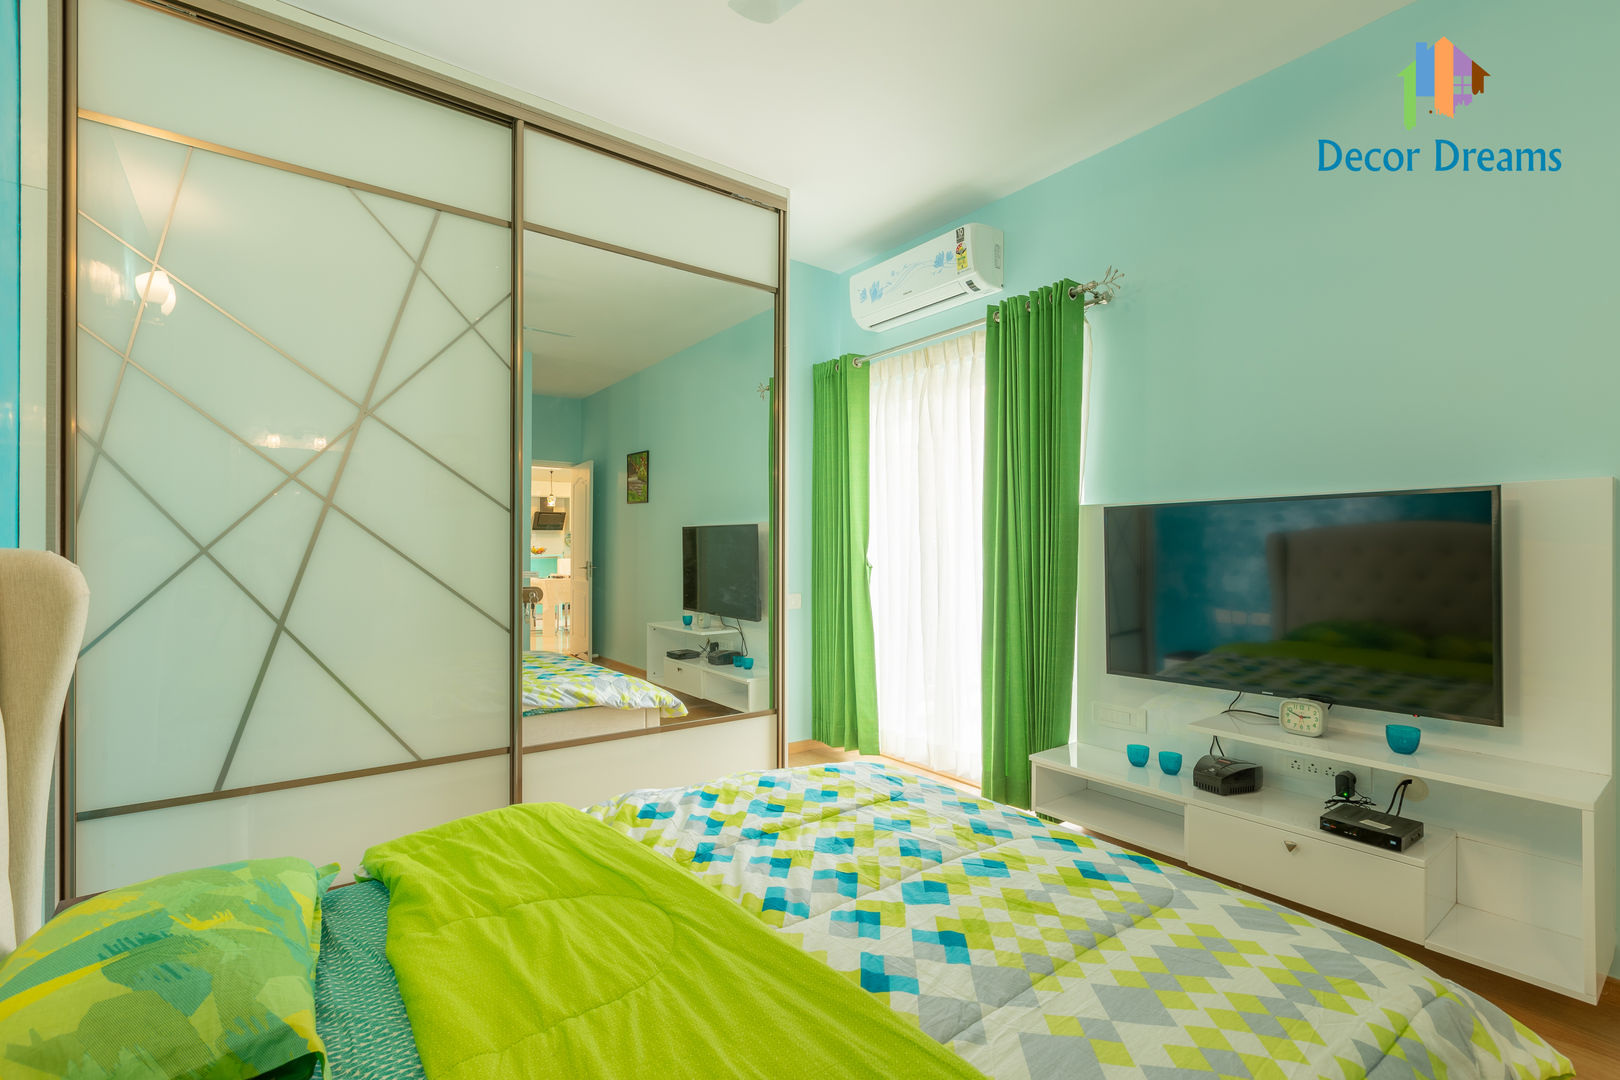 Brigade Meadows, 3 BHK—Dr. Usha & Dr. Mohan, DECOR DREAMS DECOR DREAMS Small bedroom